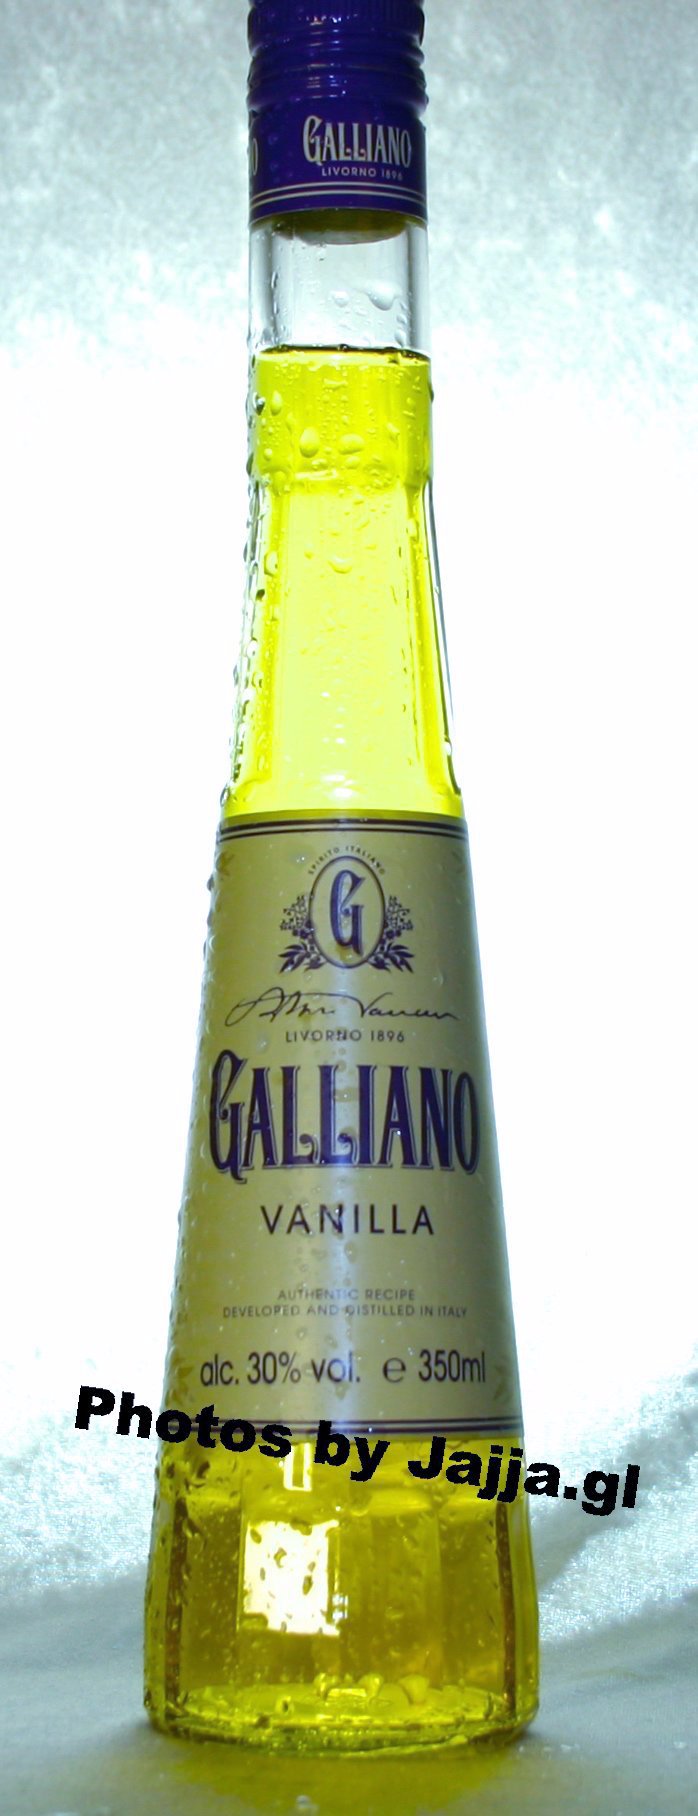 Galliano 35 cl